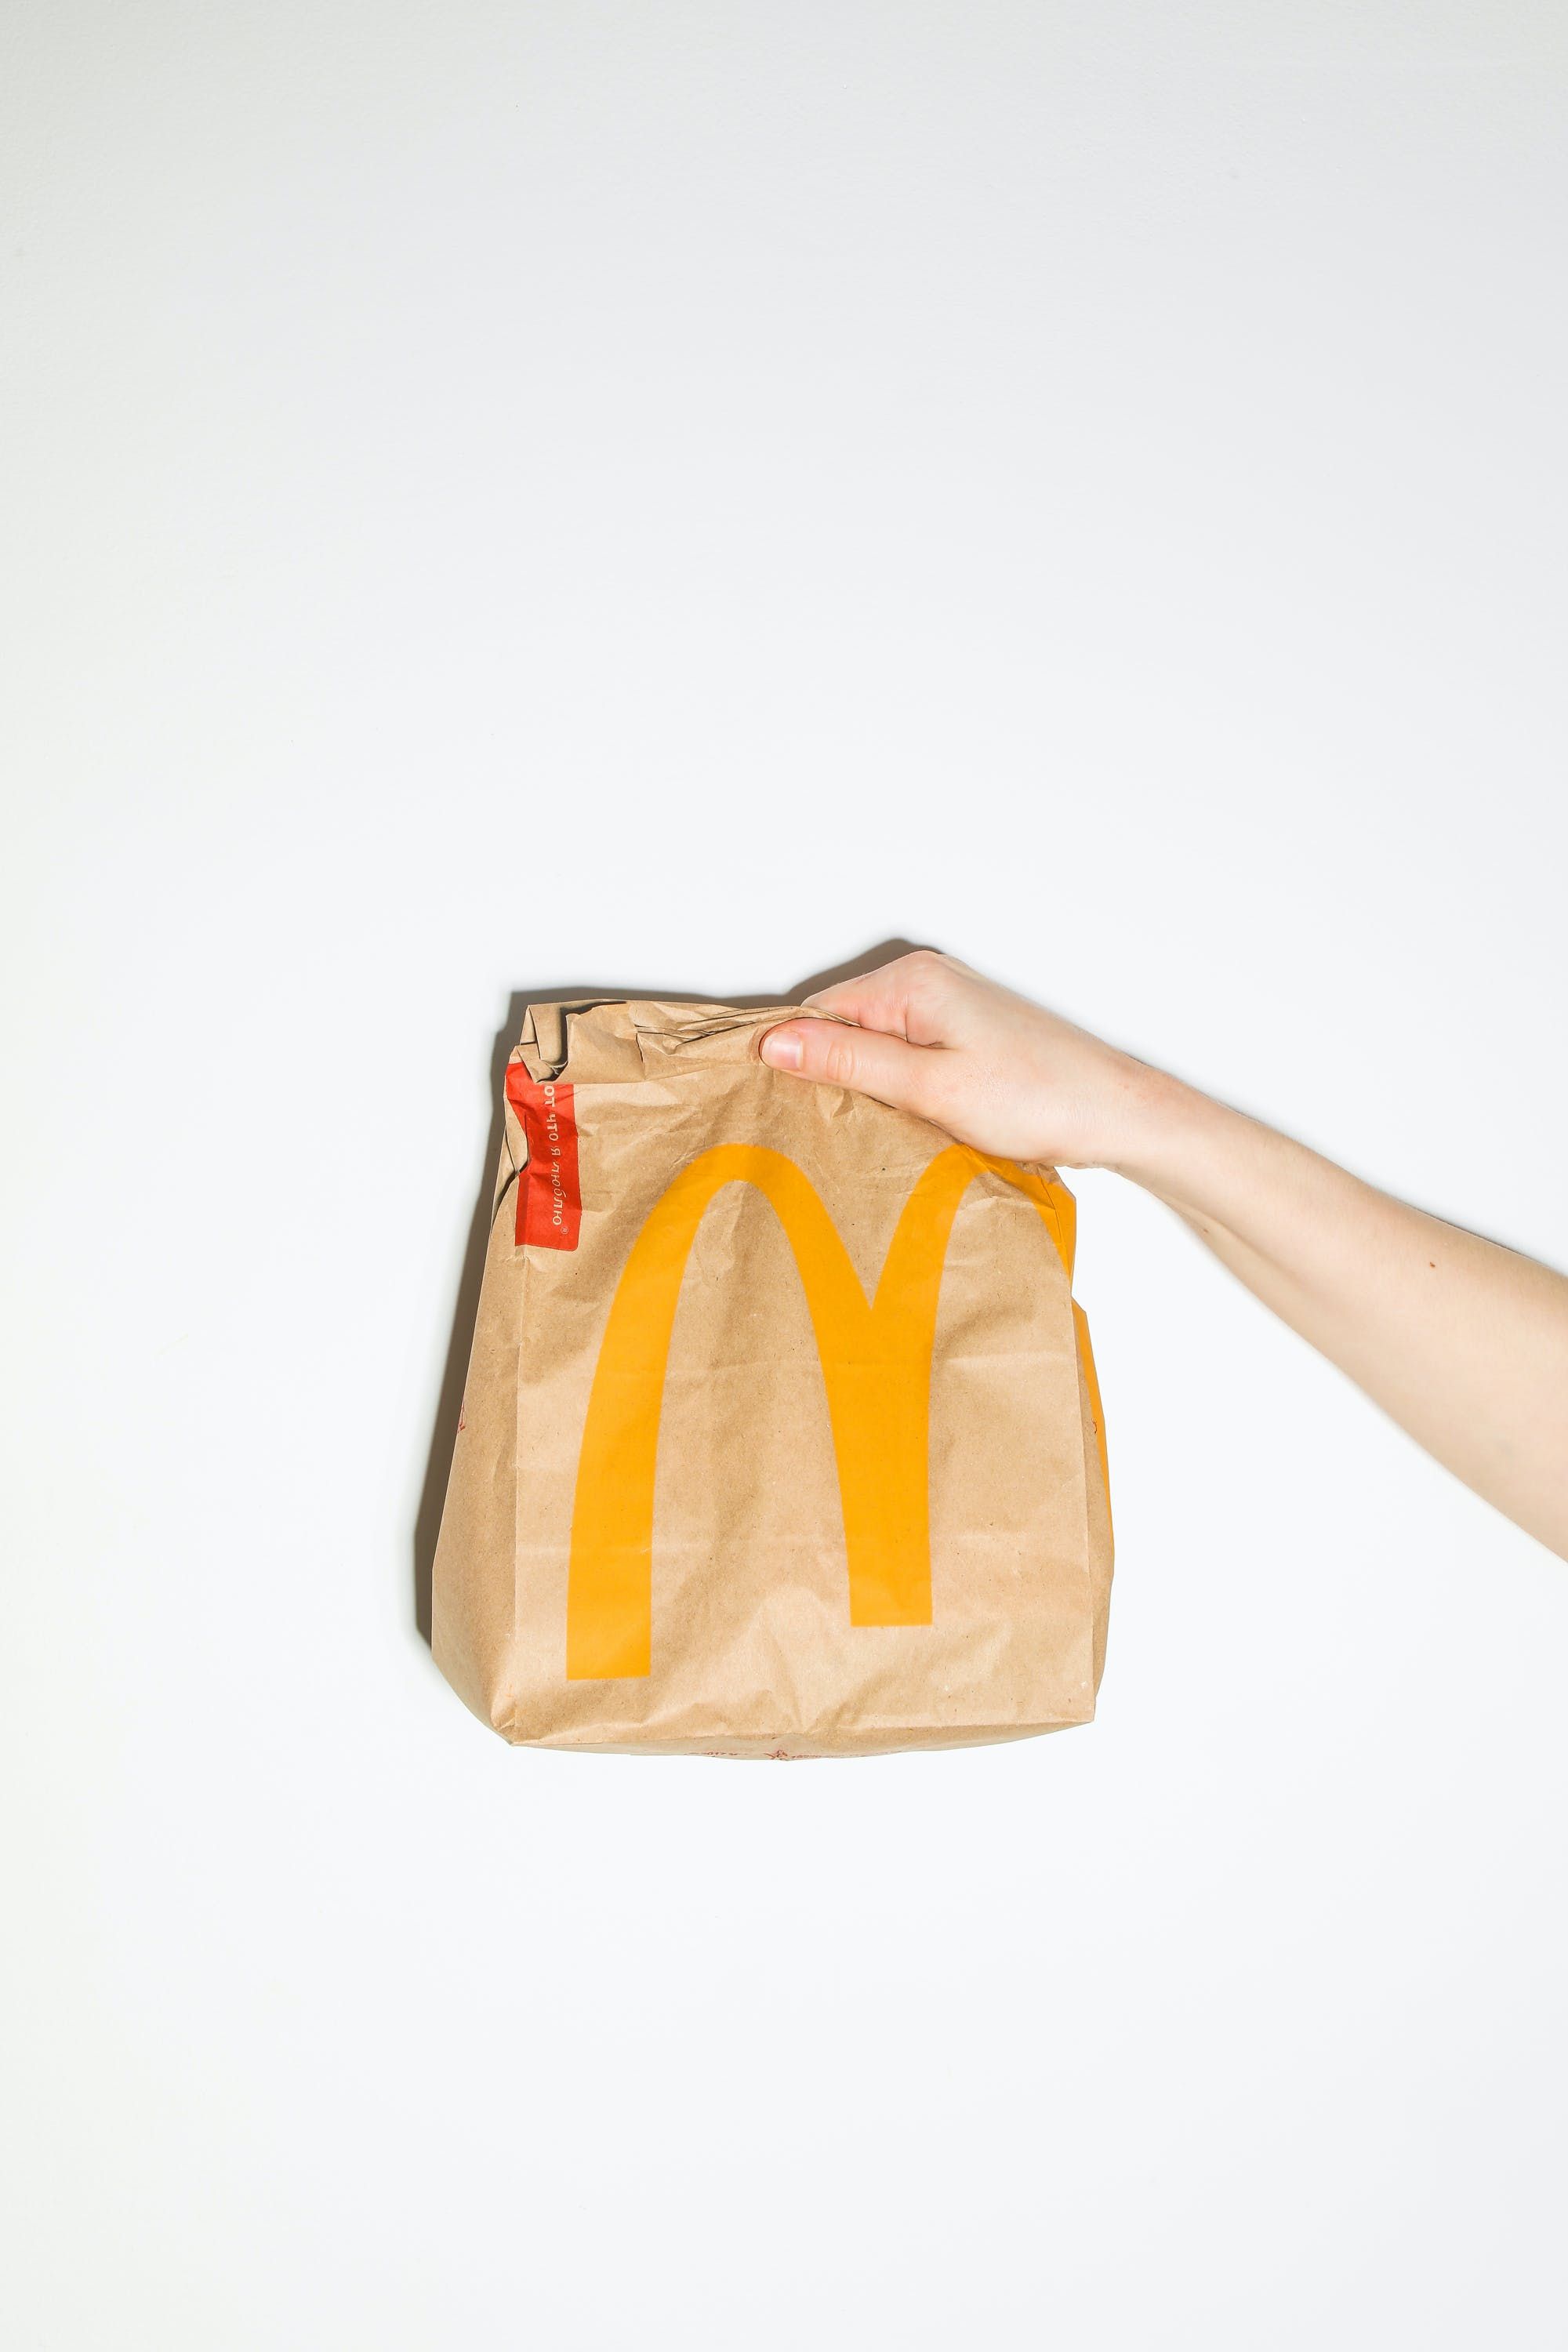 McDonald's изменит рецепт "Биг Мака"